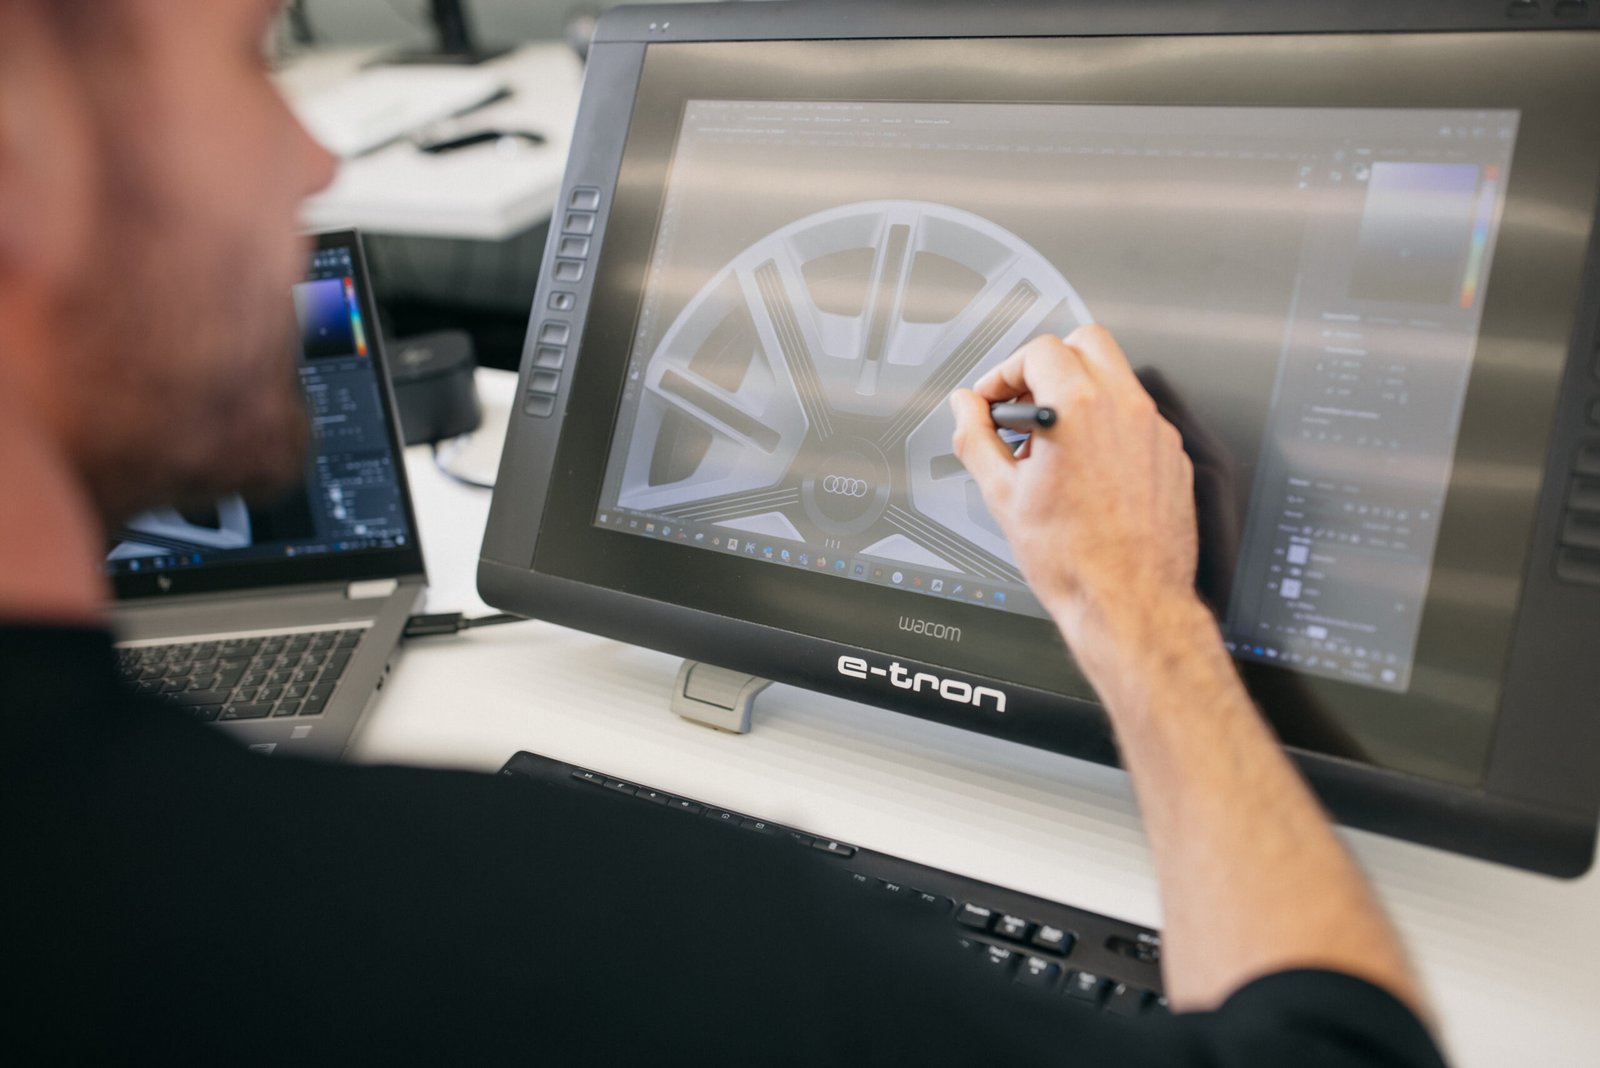 Reinvent the wheel? "FelGAN" inspires new rim designs with AI